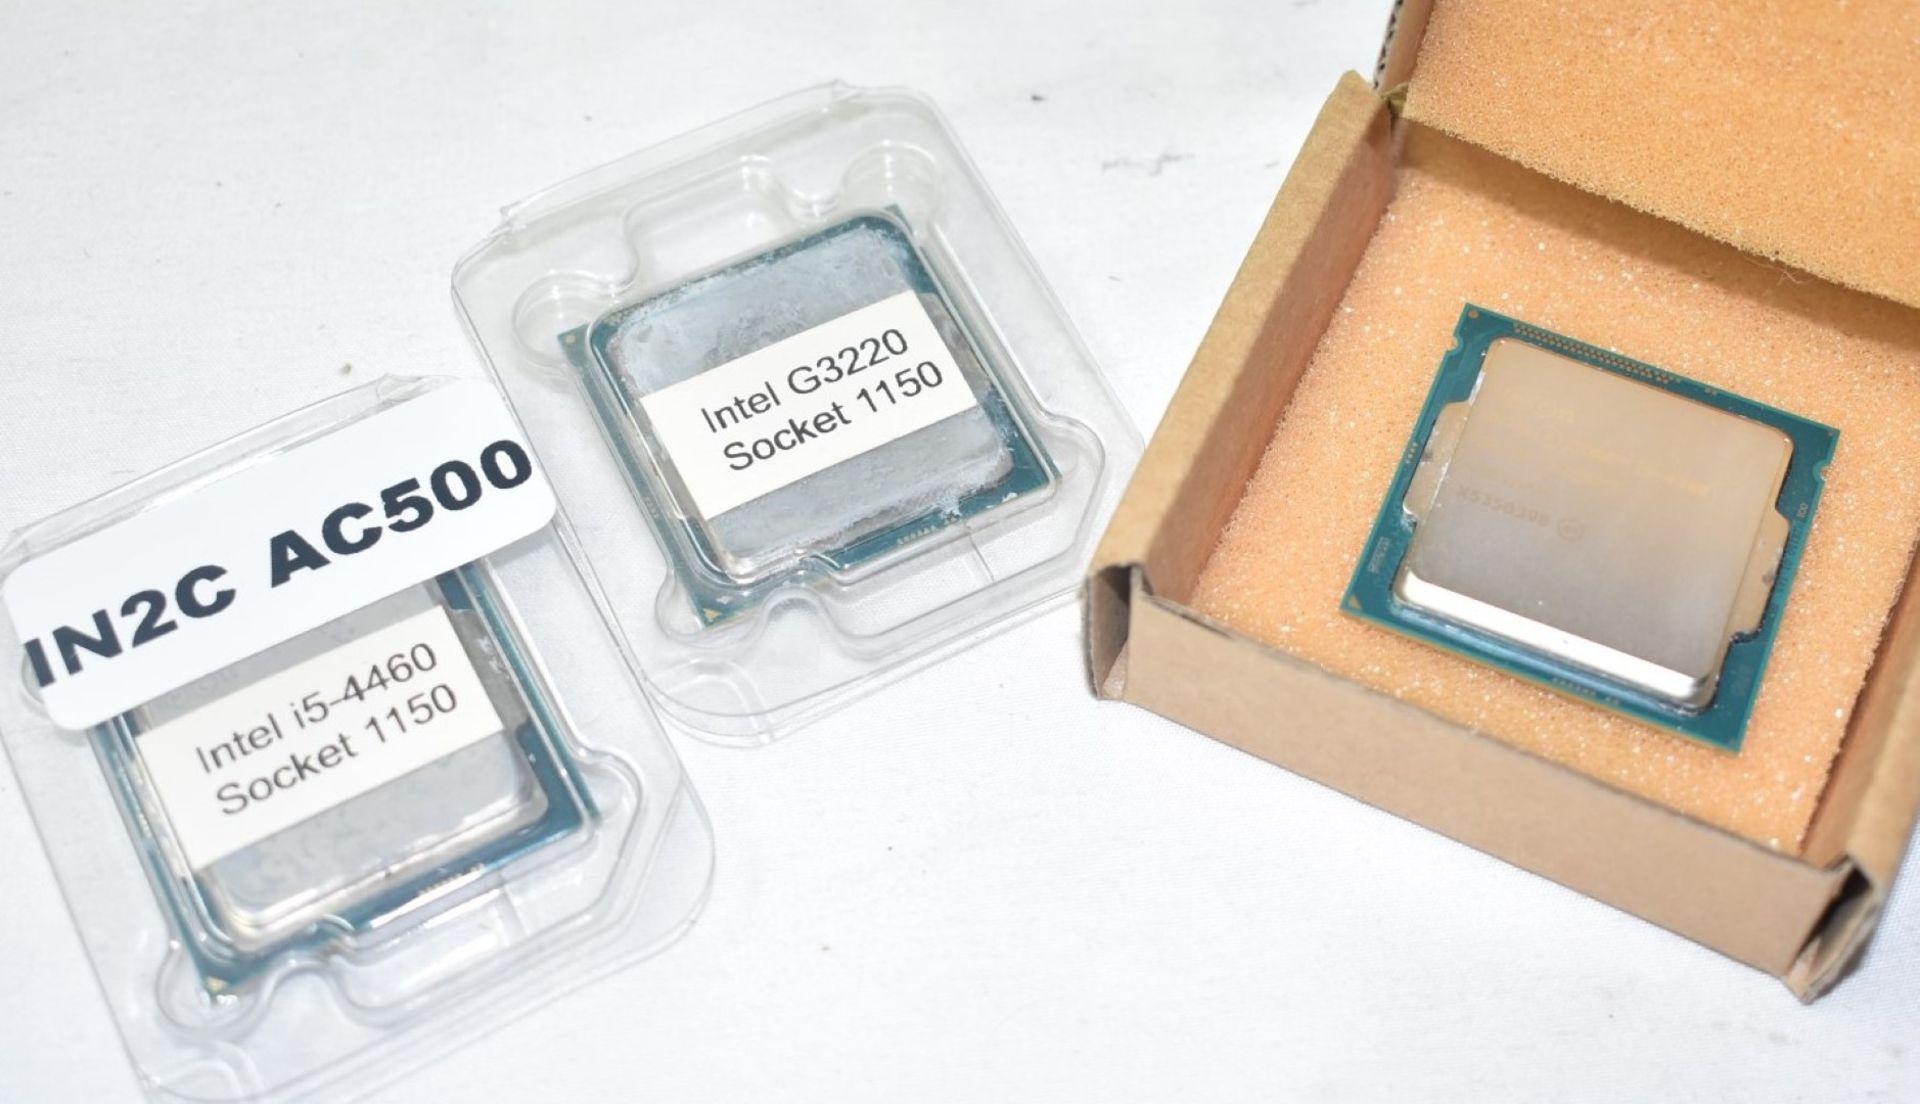 4 x Intel Socket LA1150 Desktop PC Processors - Includes 1 x I5-4460, 2 x G3220 and 1 x I5-4460